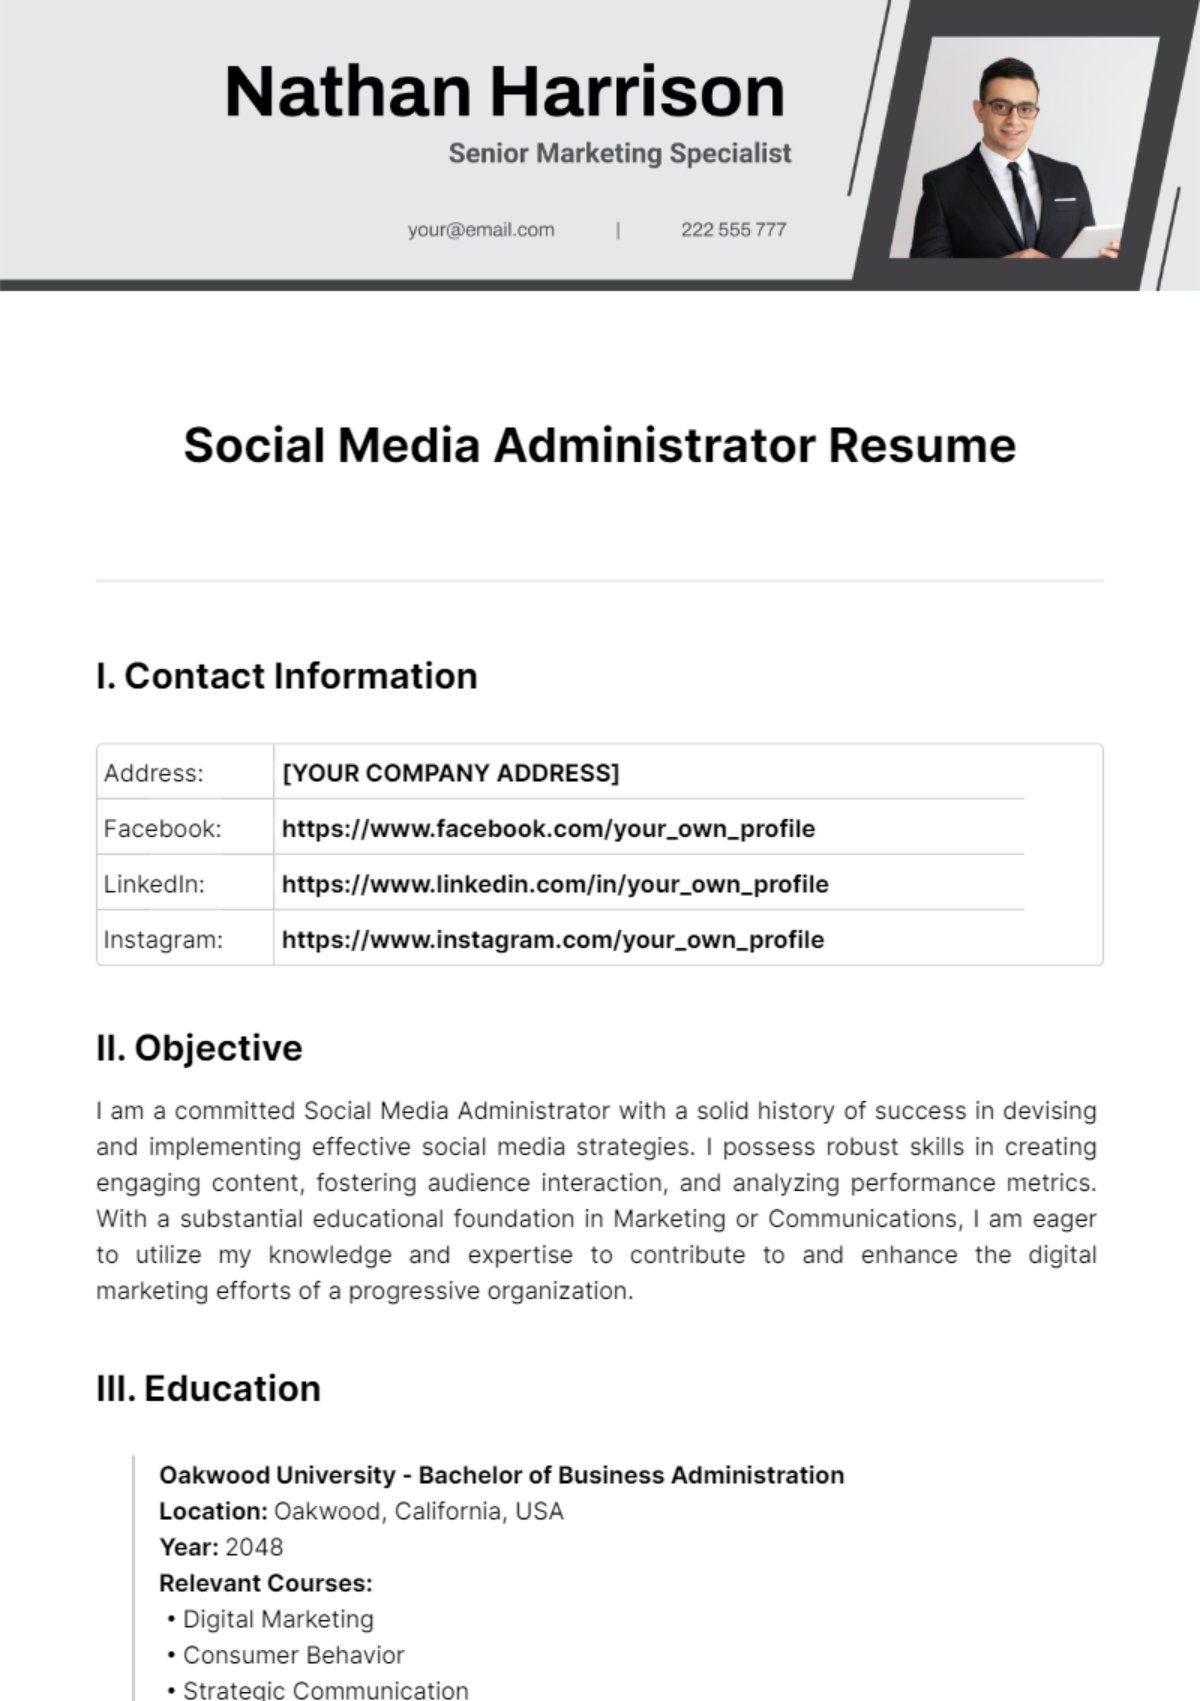 Social Media Administrator Resume Template